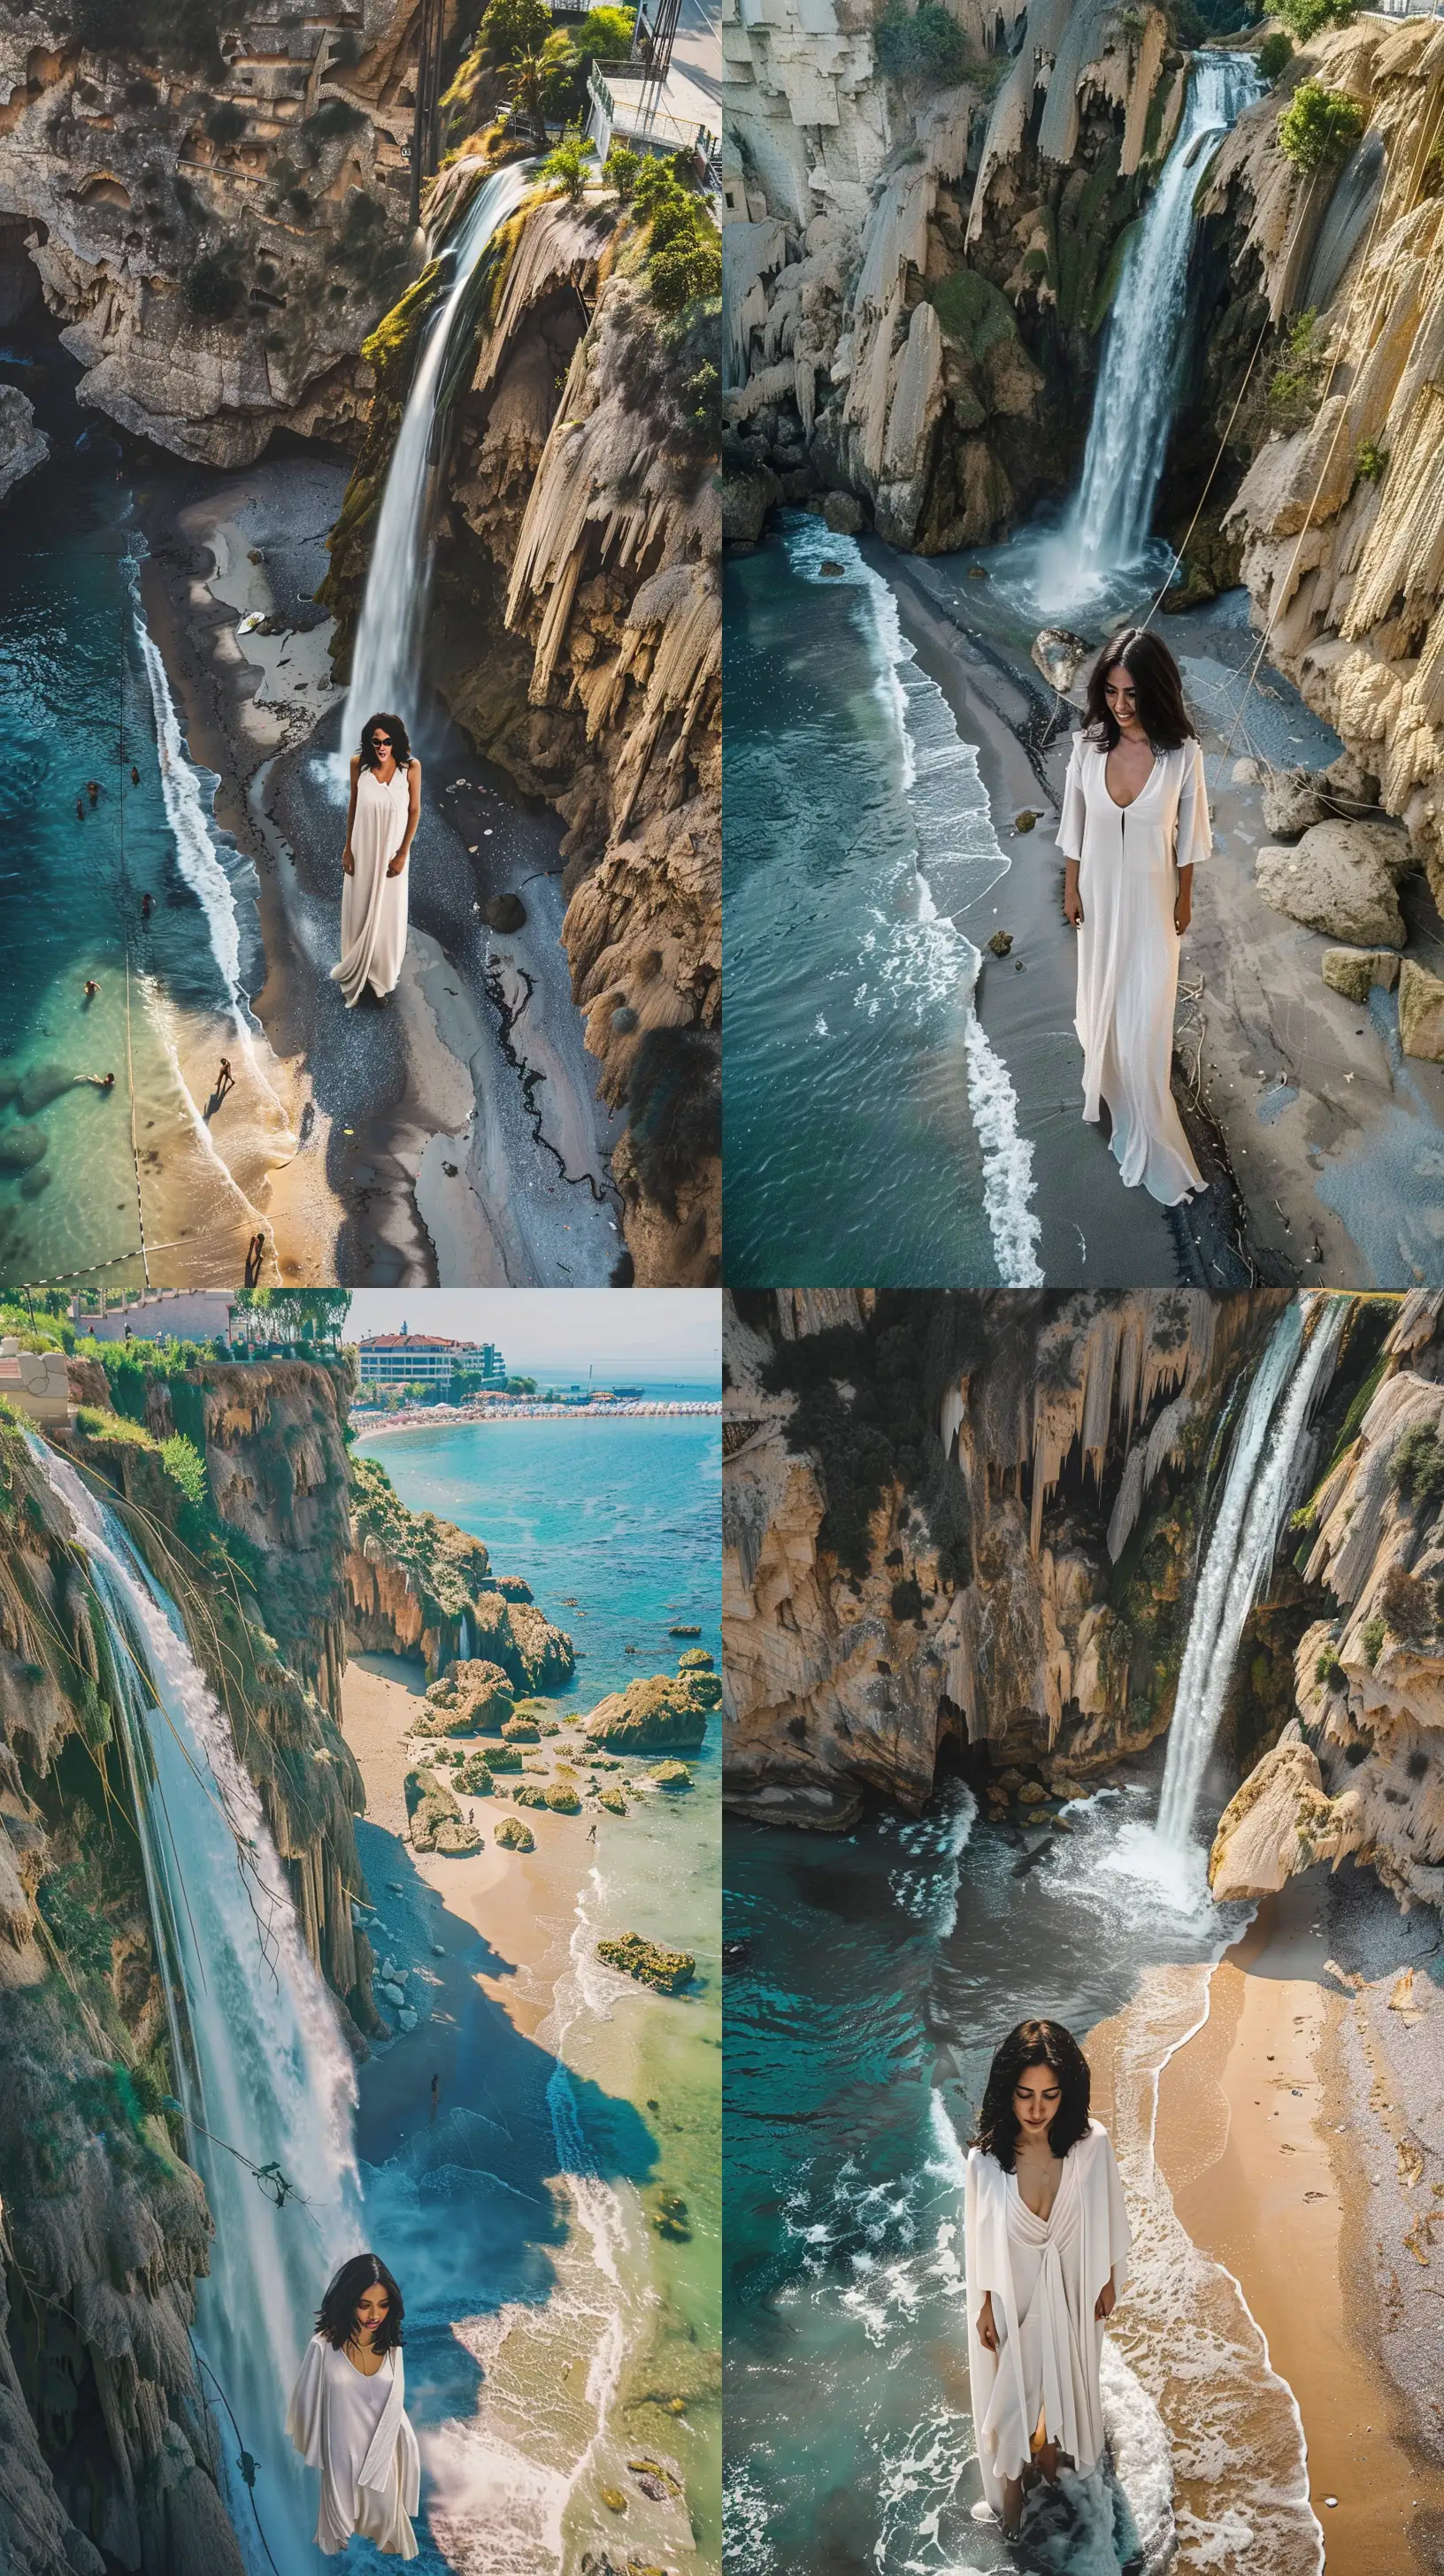 Aerial-Coastal-Waterfall-Scene-in-Antalya-Trkiye